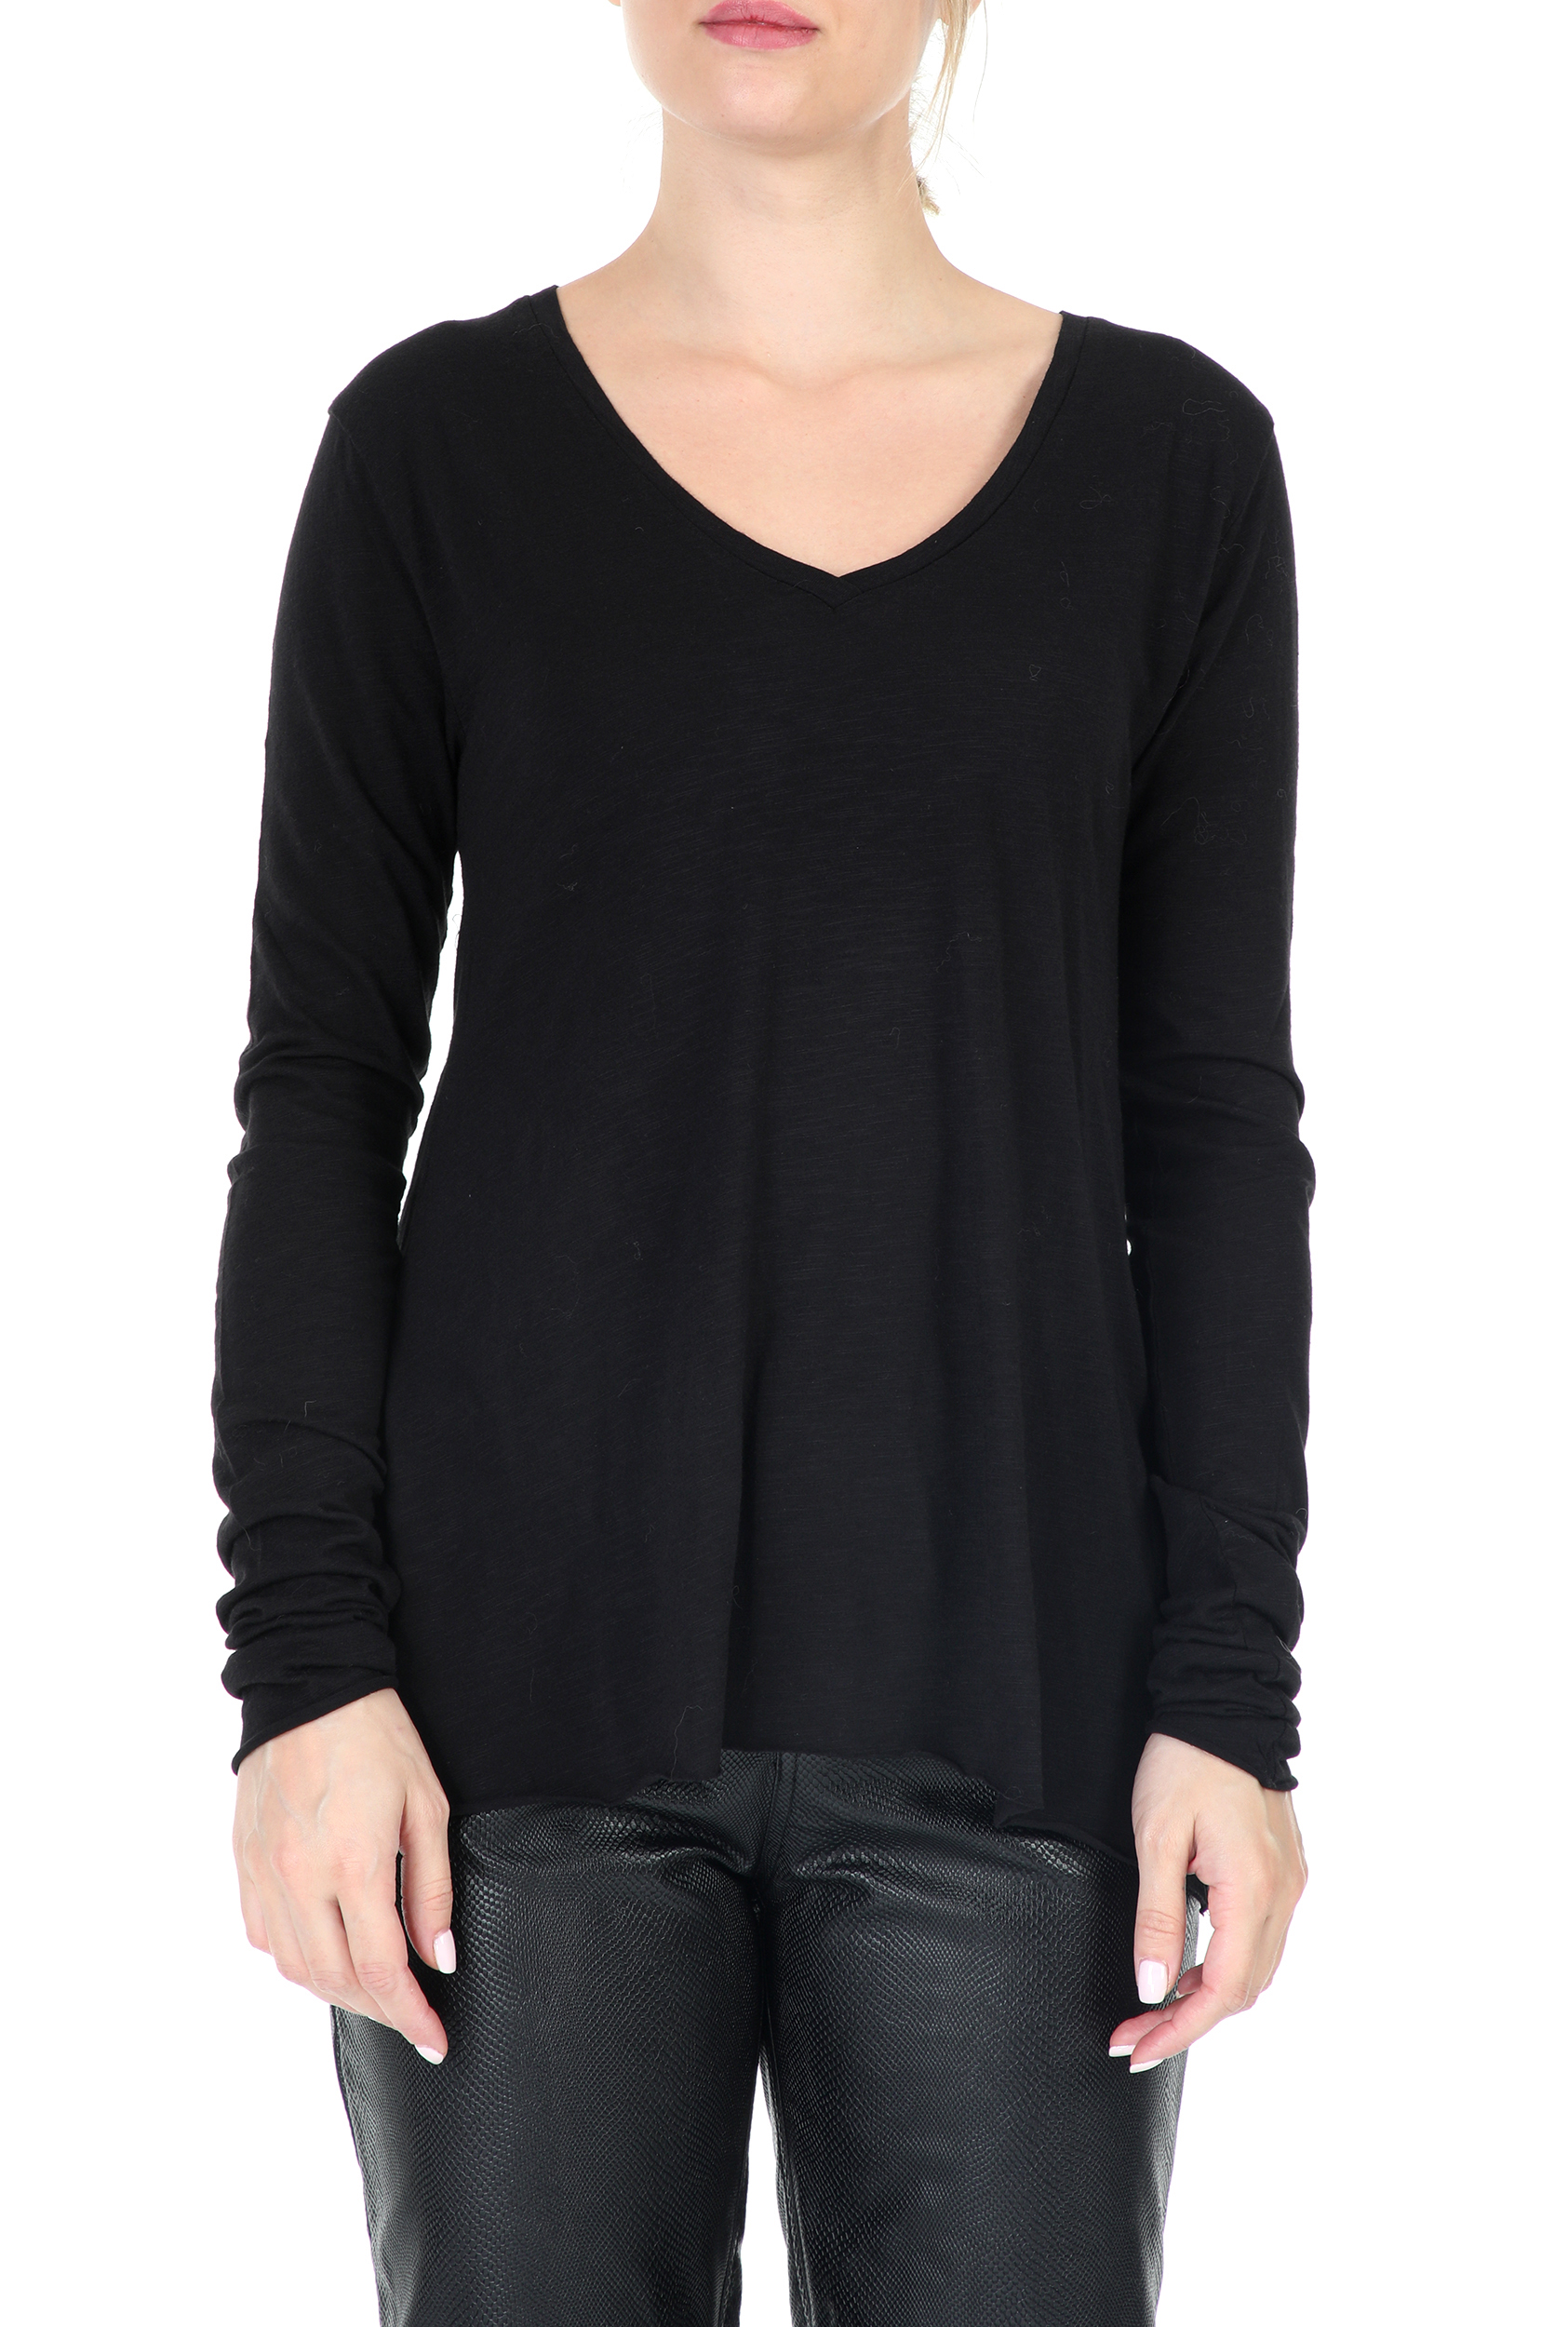 AMERICAN VINTAGE – Γυναικεία μακρυμάνικη μπλούζα AMERICAN VINTAGE μαύρη 1796061.0-7171